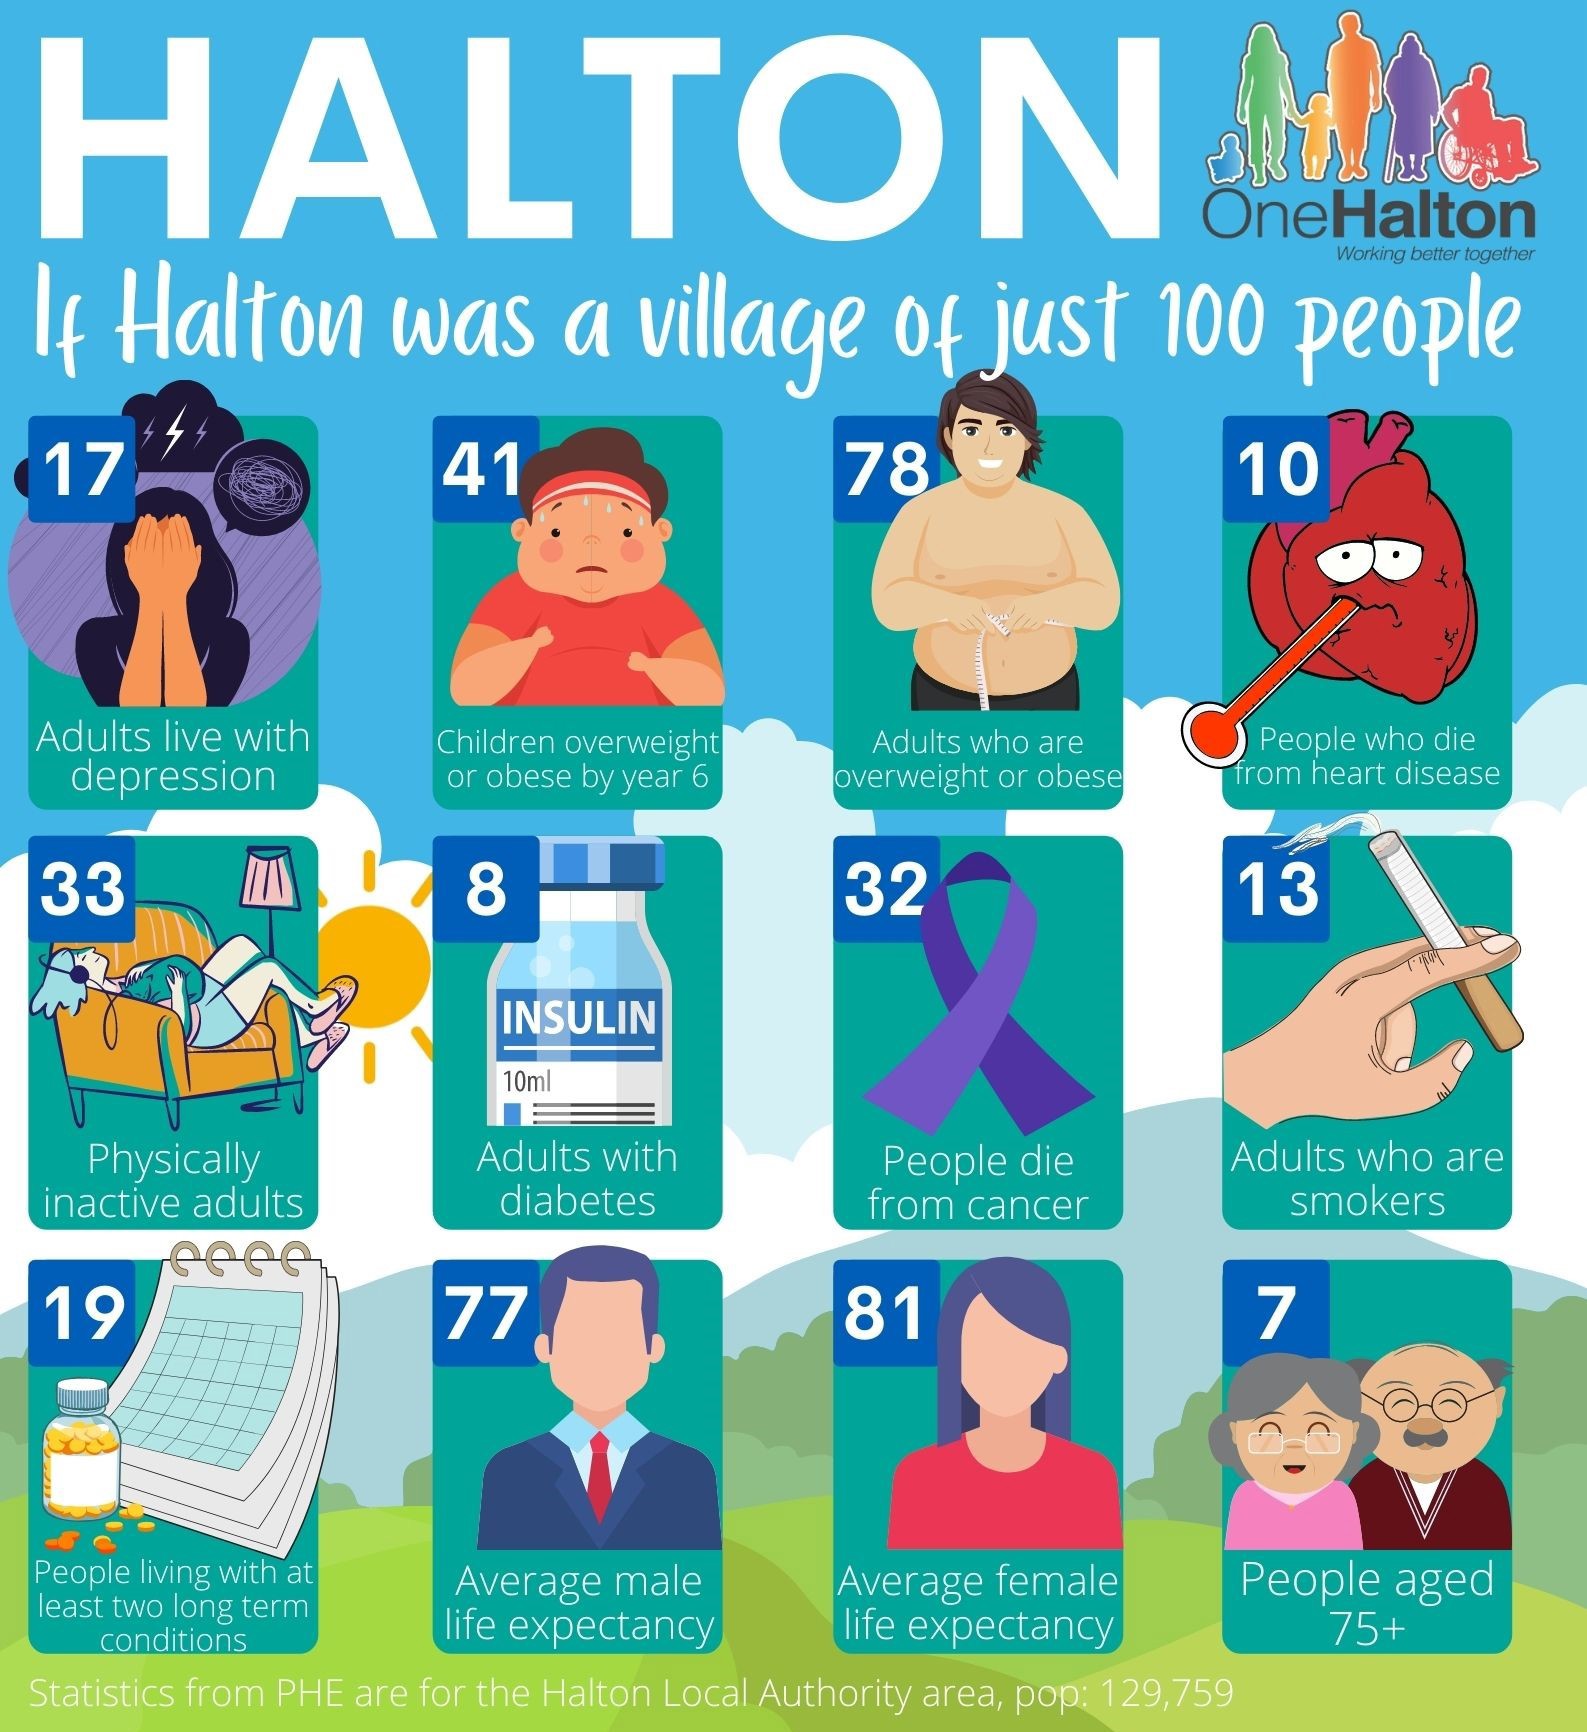 Statistics if Halton was a population of 100 people